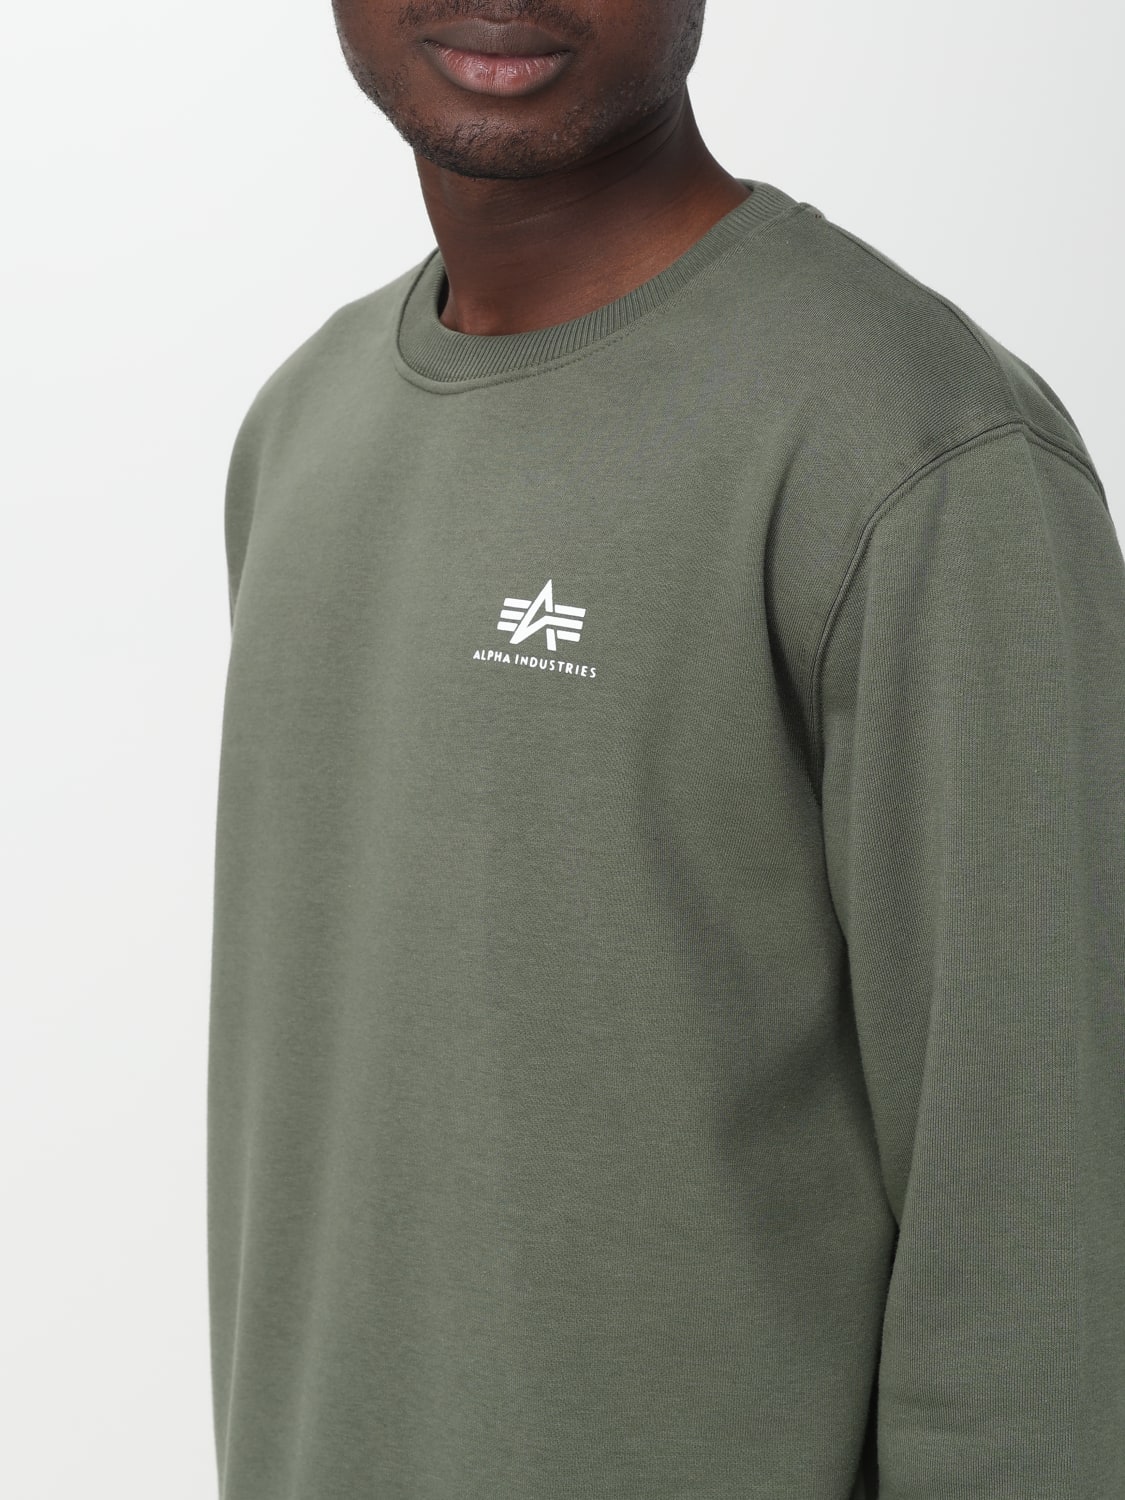 | Alpha at - online for Olive INDUSTRIES: ALPHA 188307 sweatshirt Industries sweatshirt man